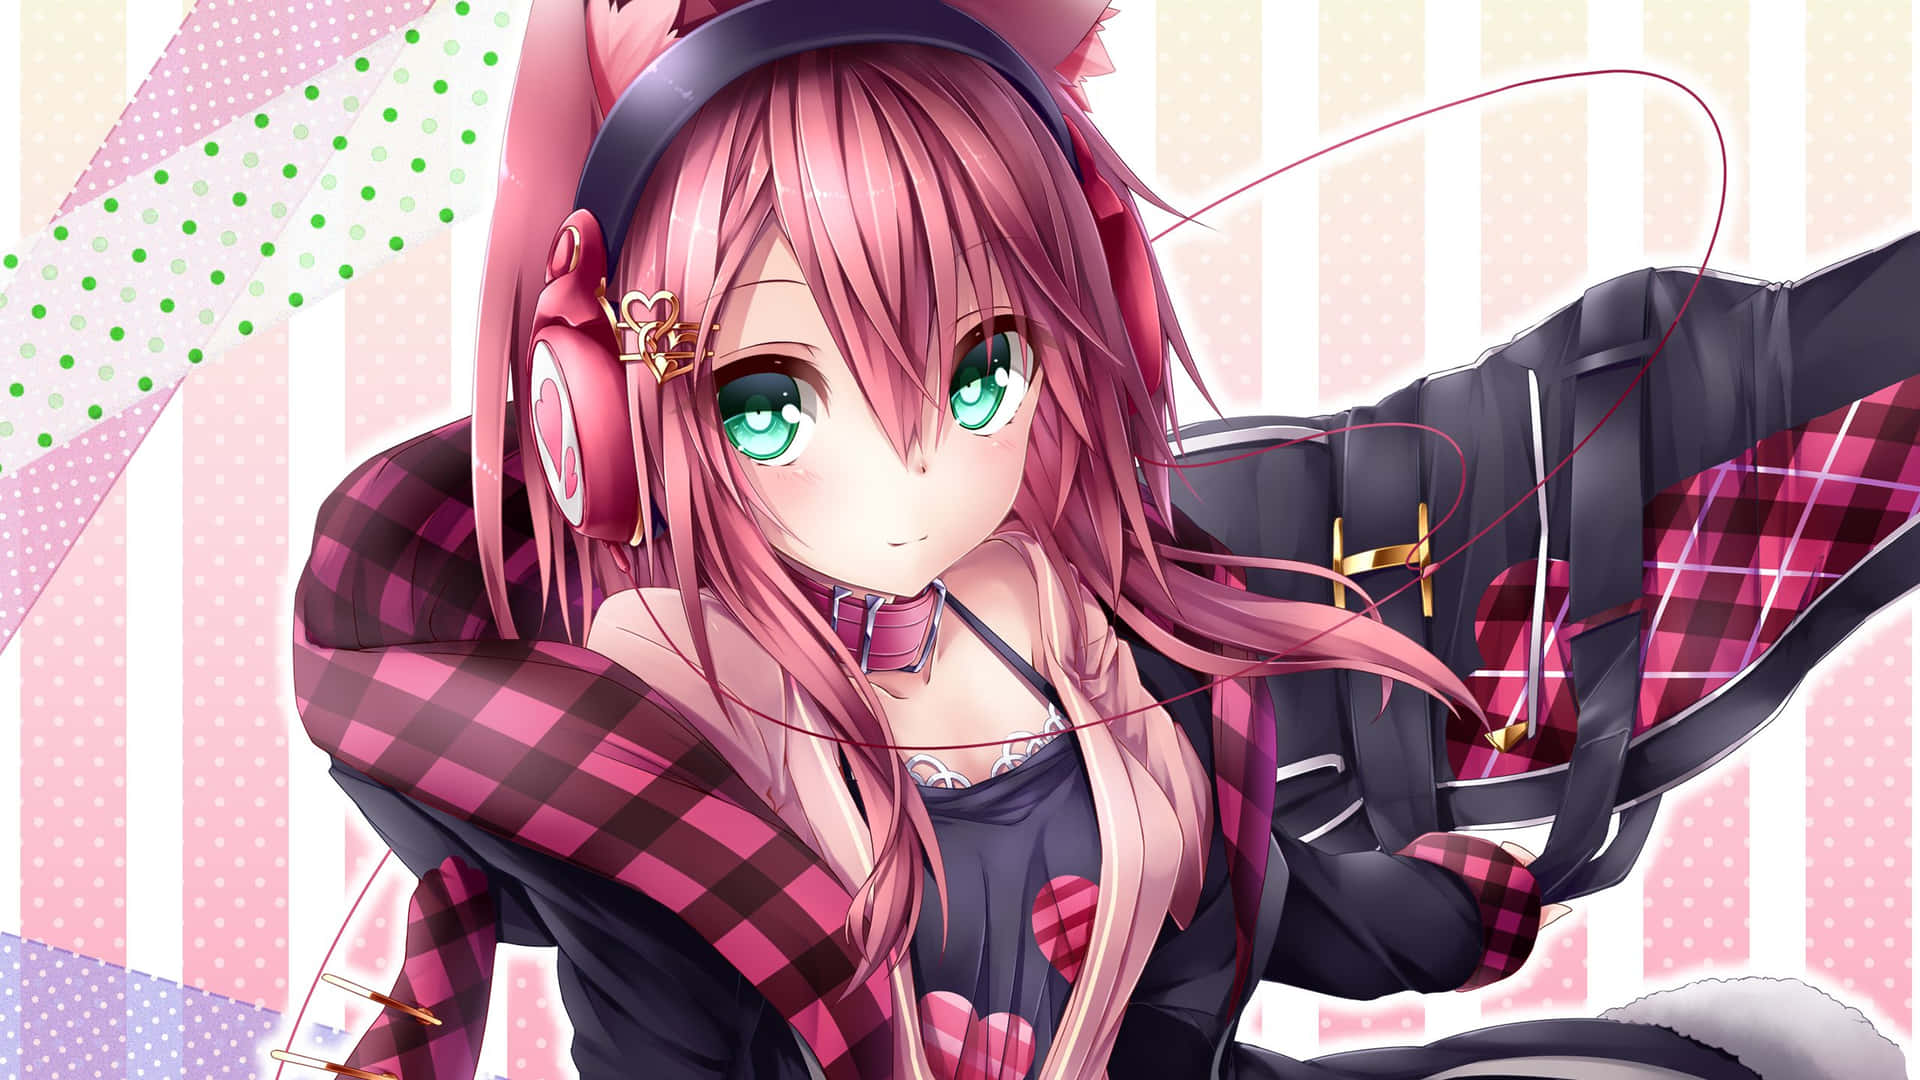 Anime Girlwith Headphonesand Pink Hair Wallpaper